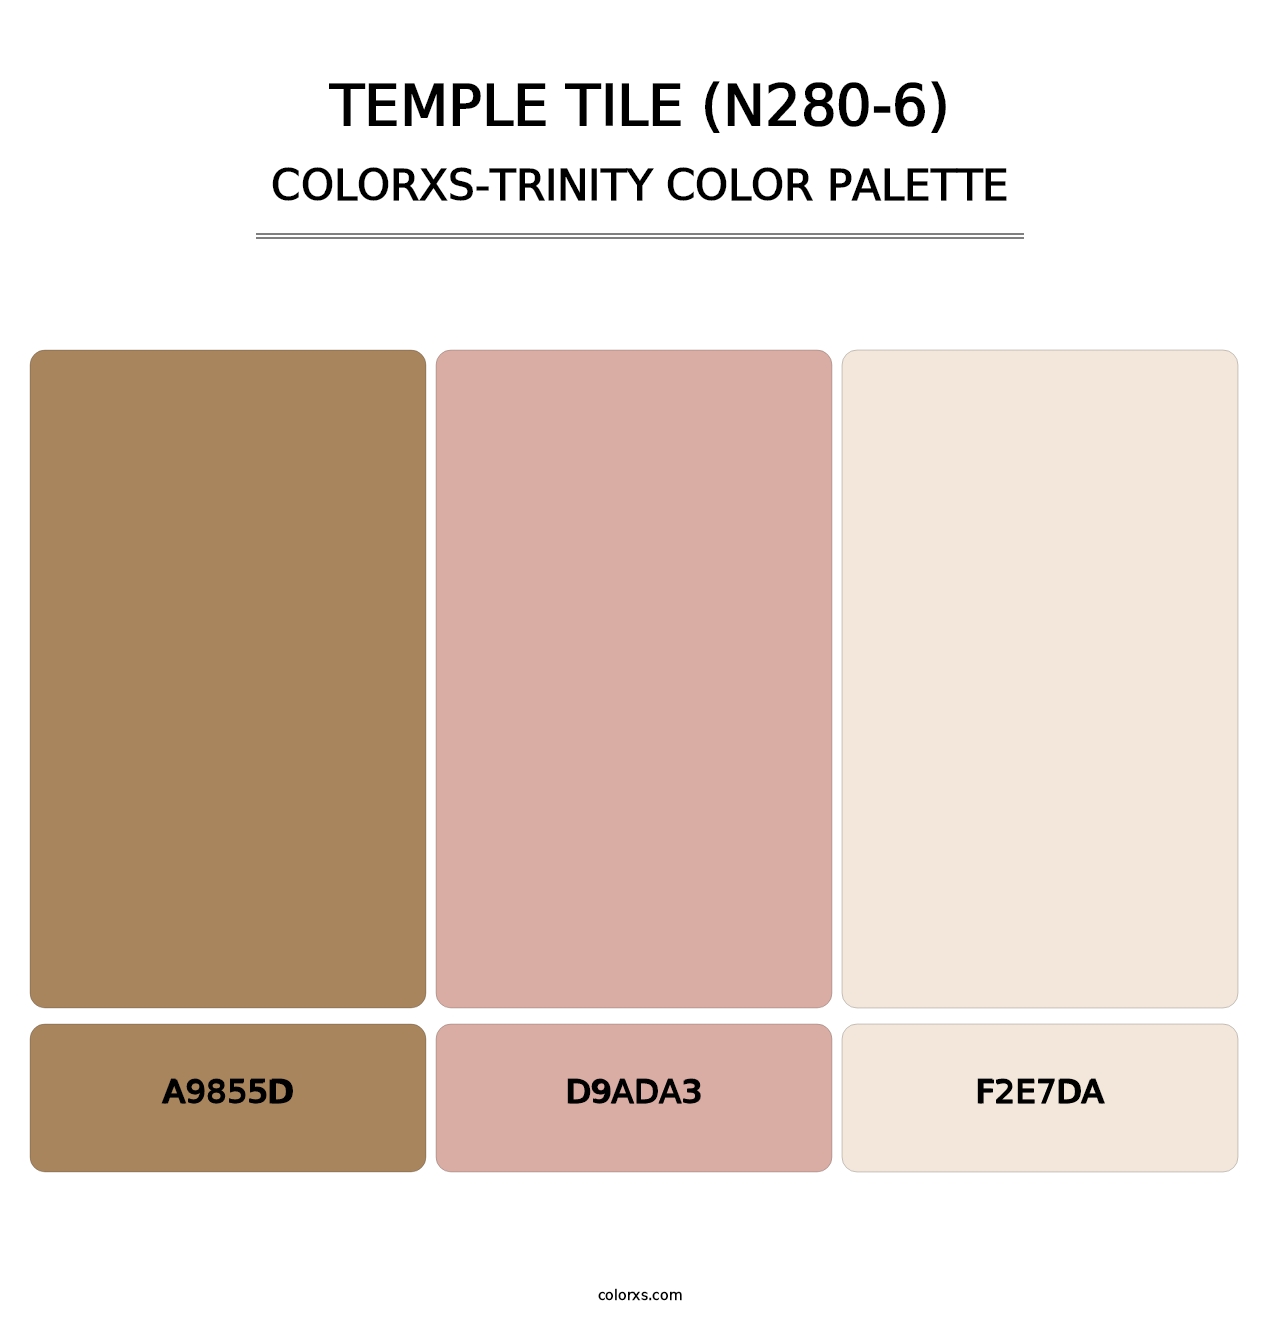 Temple Tile (N280-6) - Colorxs Trinity Palette